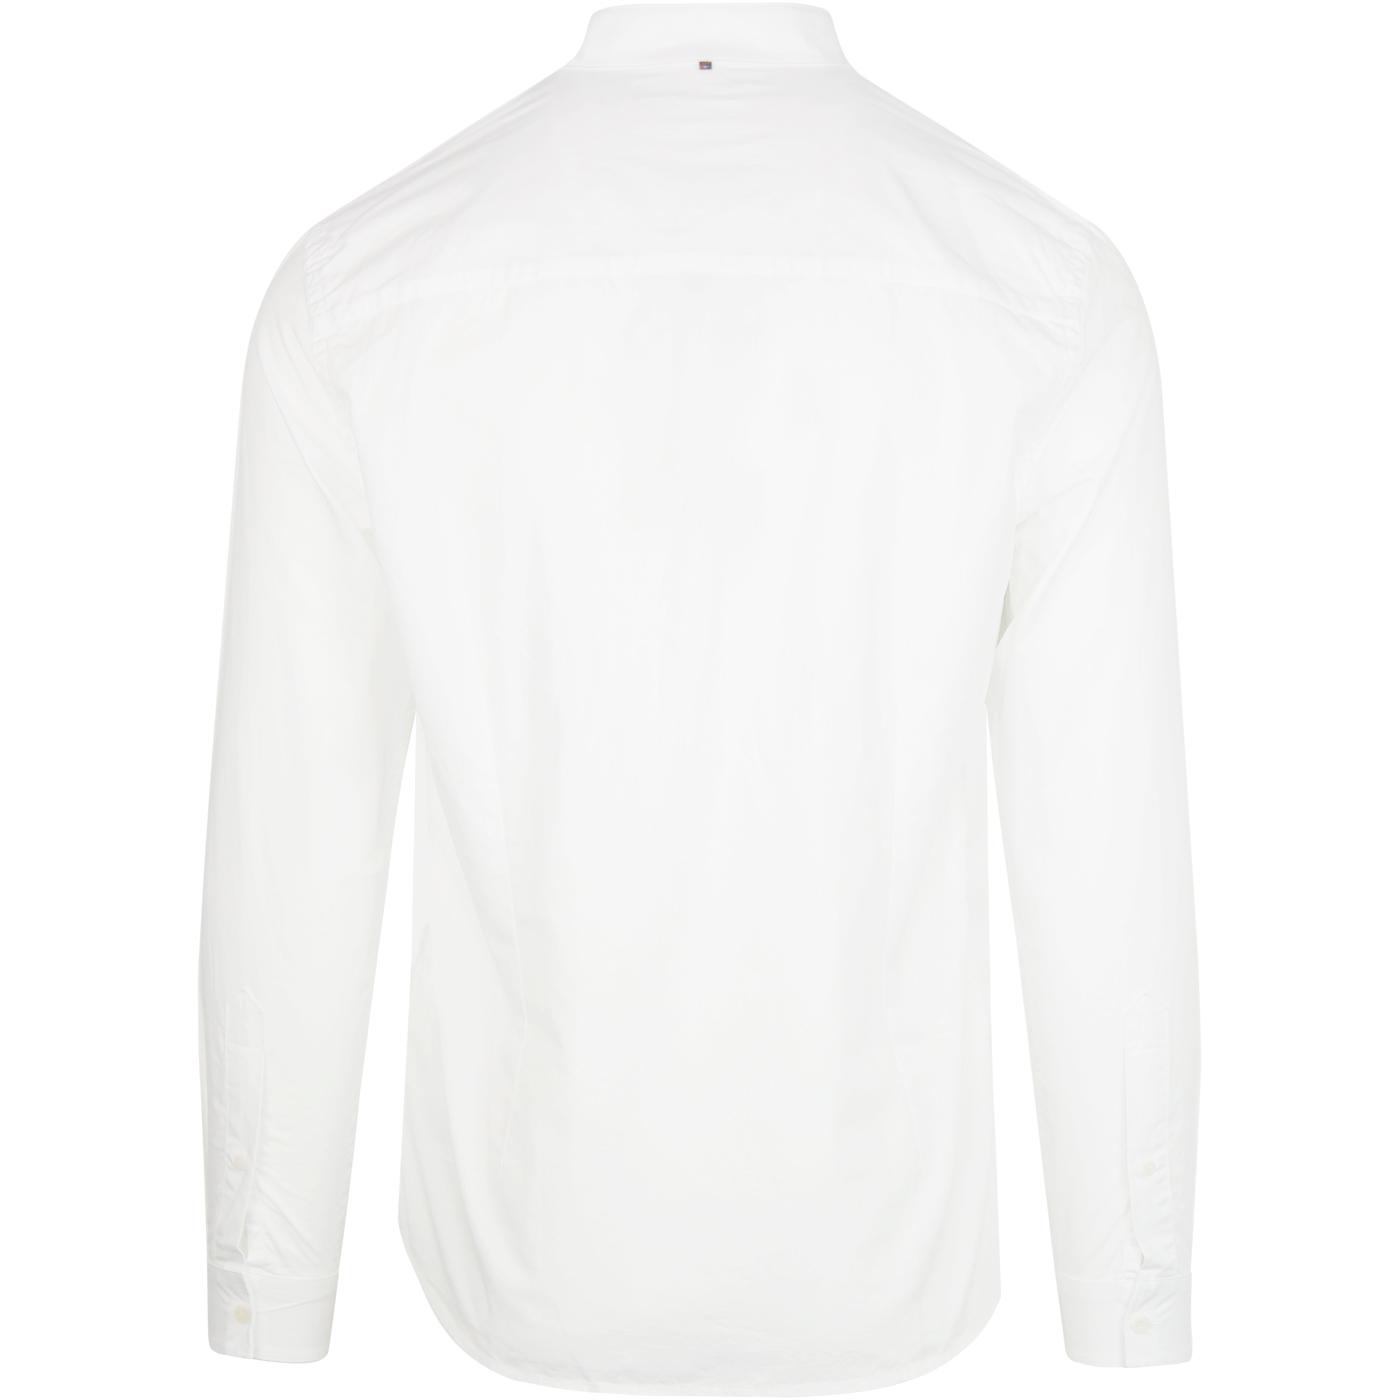 PRETTY GREEN Men's 1960s Mod Grandad Collar Shirt White